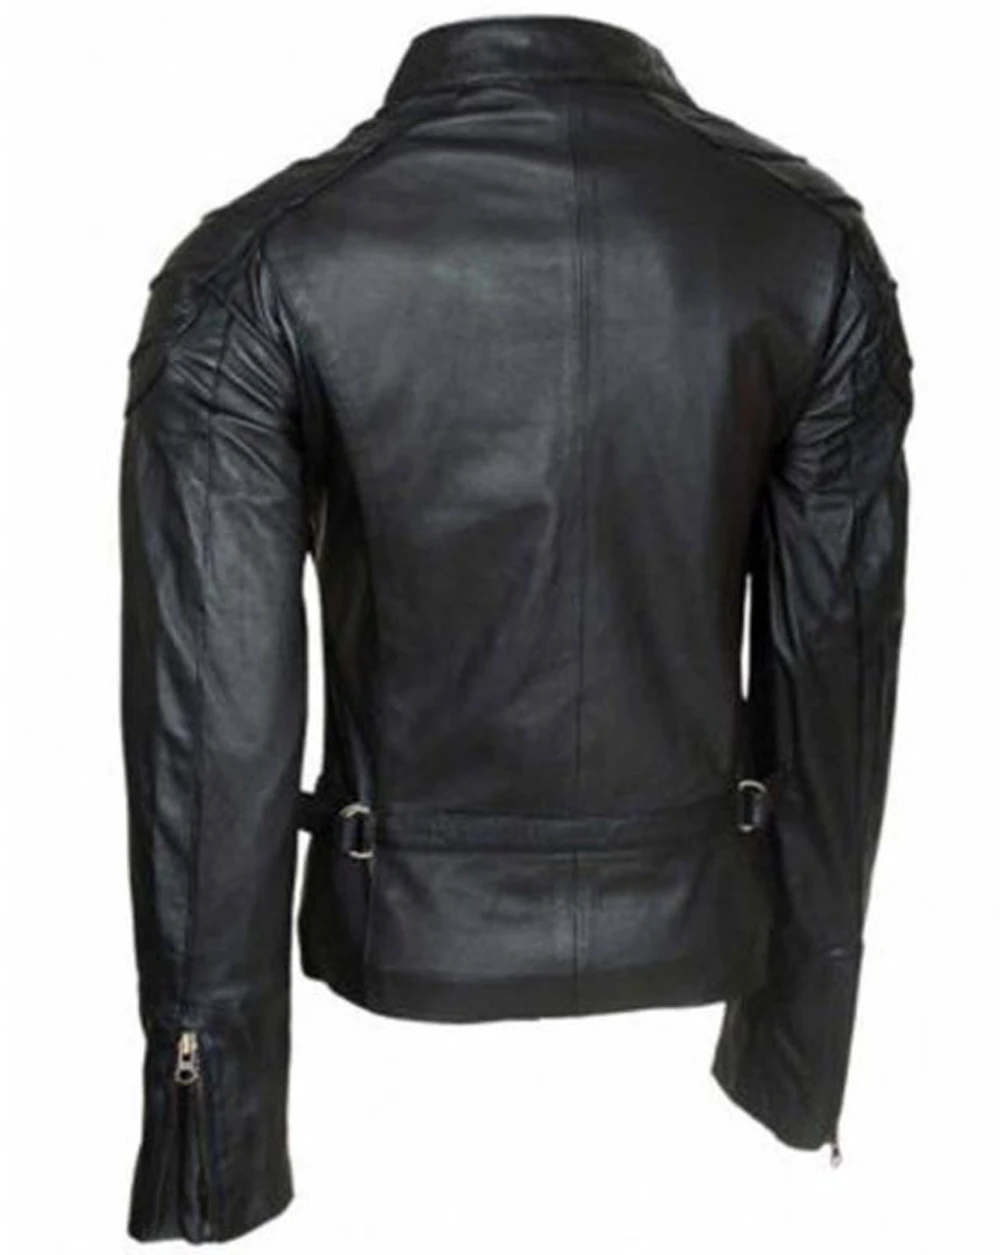 Angelina Jolie Wanted Fox Leather Jacket